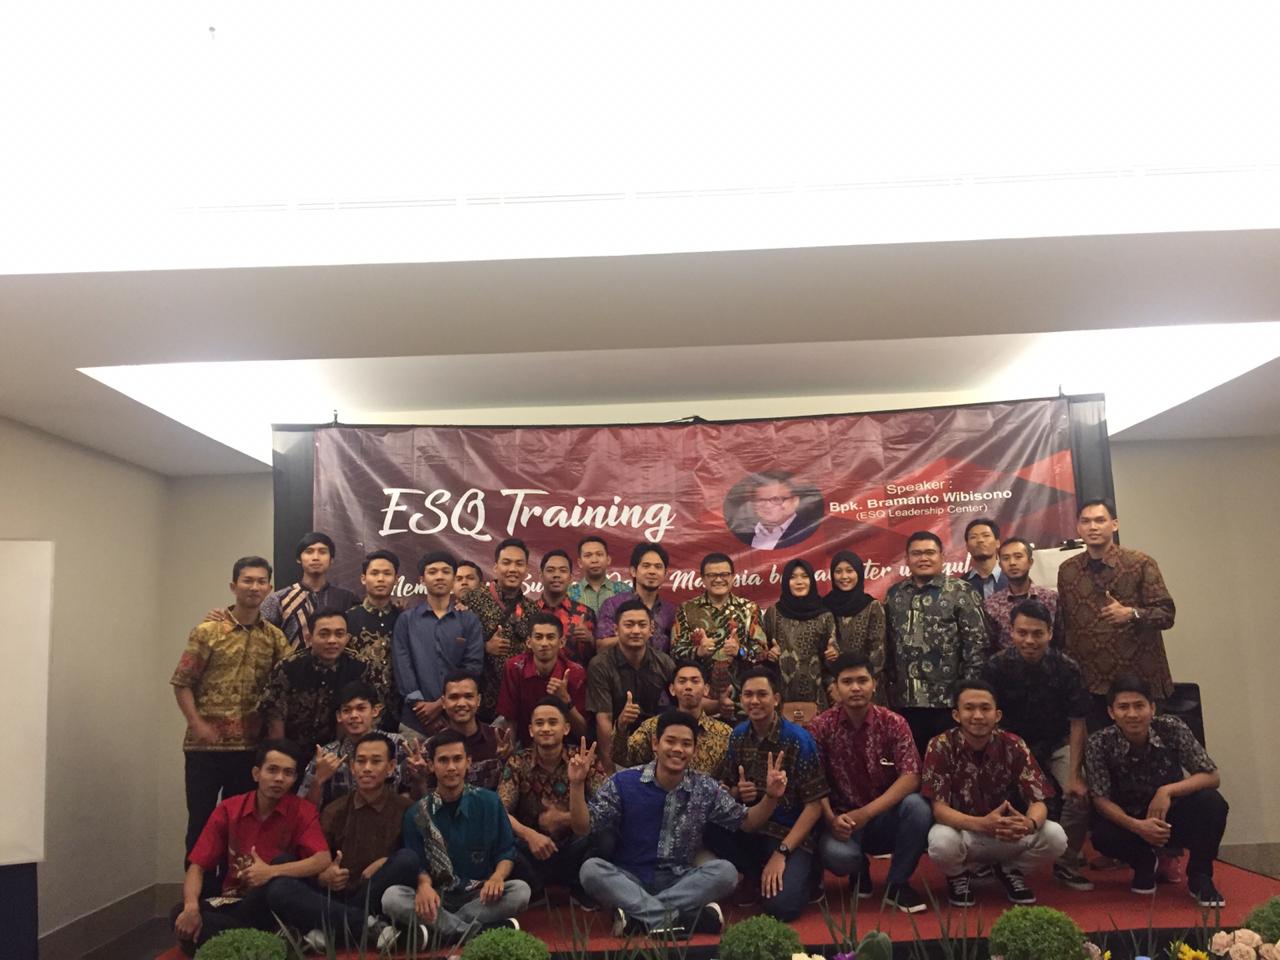 training meaning of work, akashi wahana indonesia, act consulting, bram wibisono